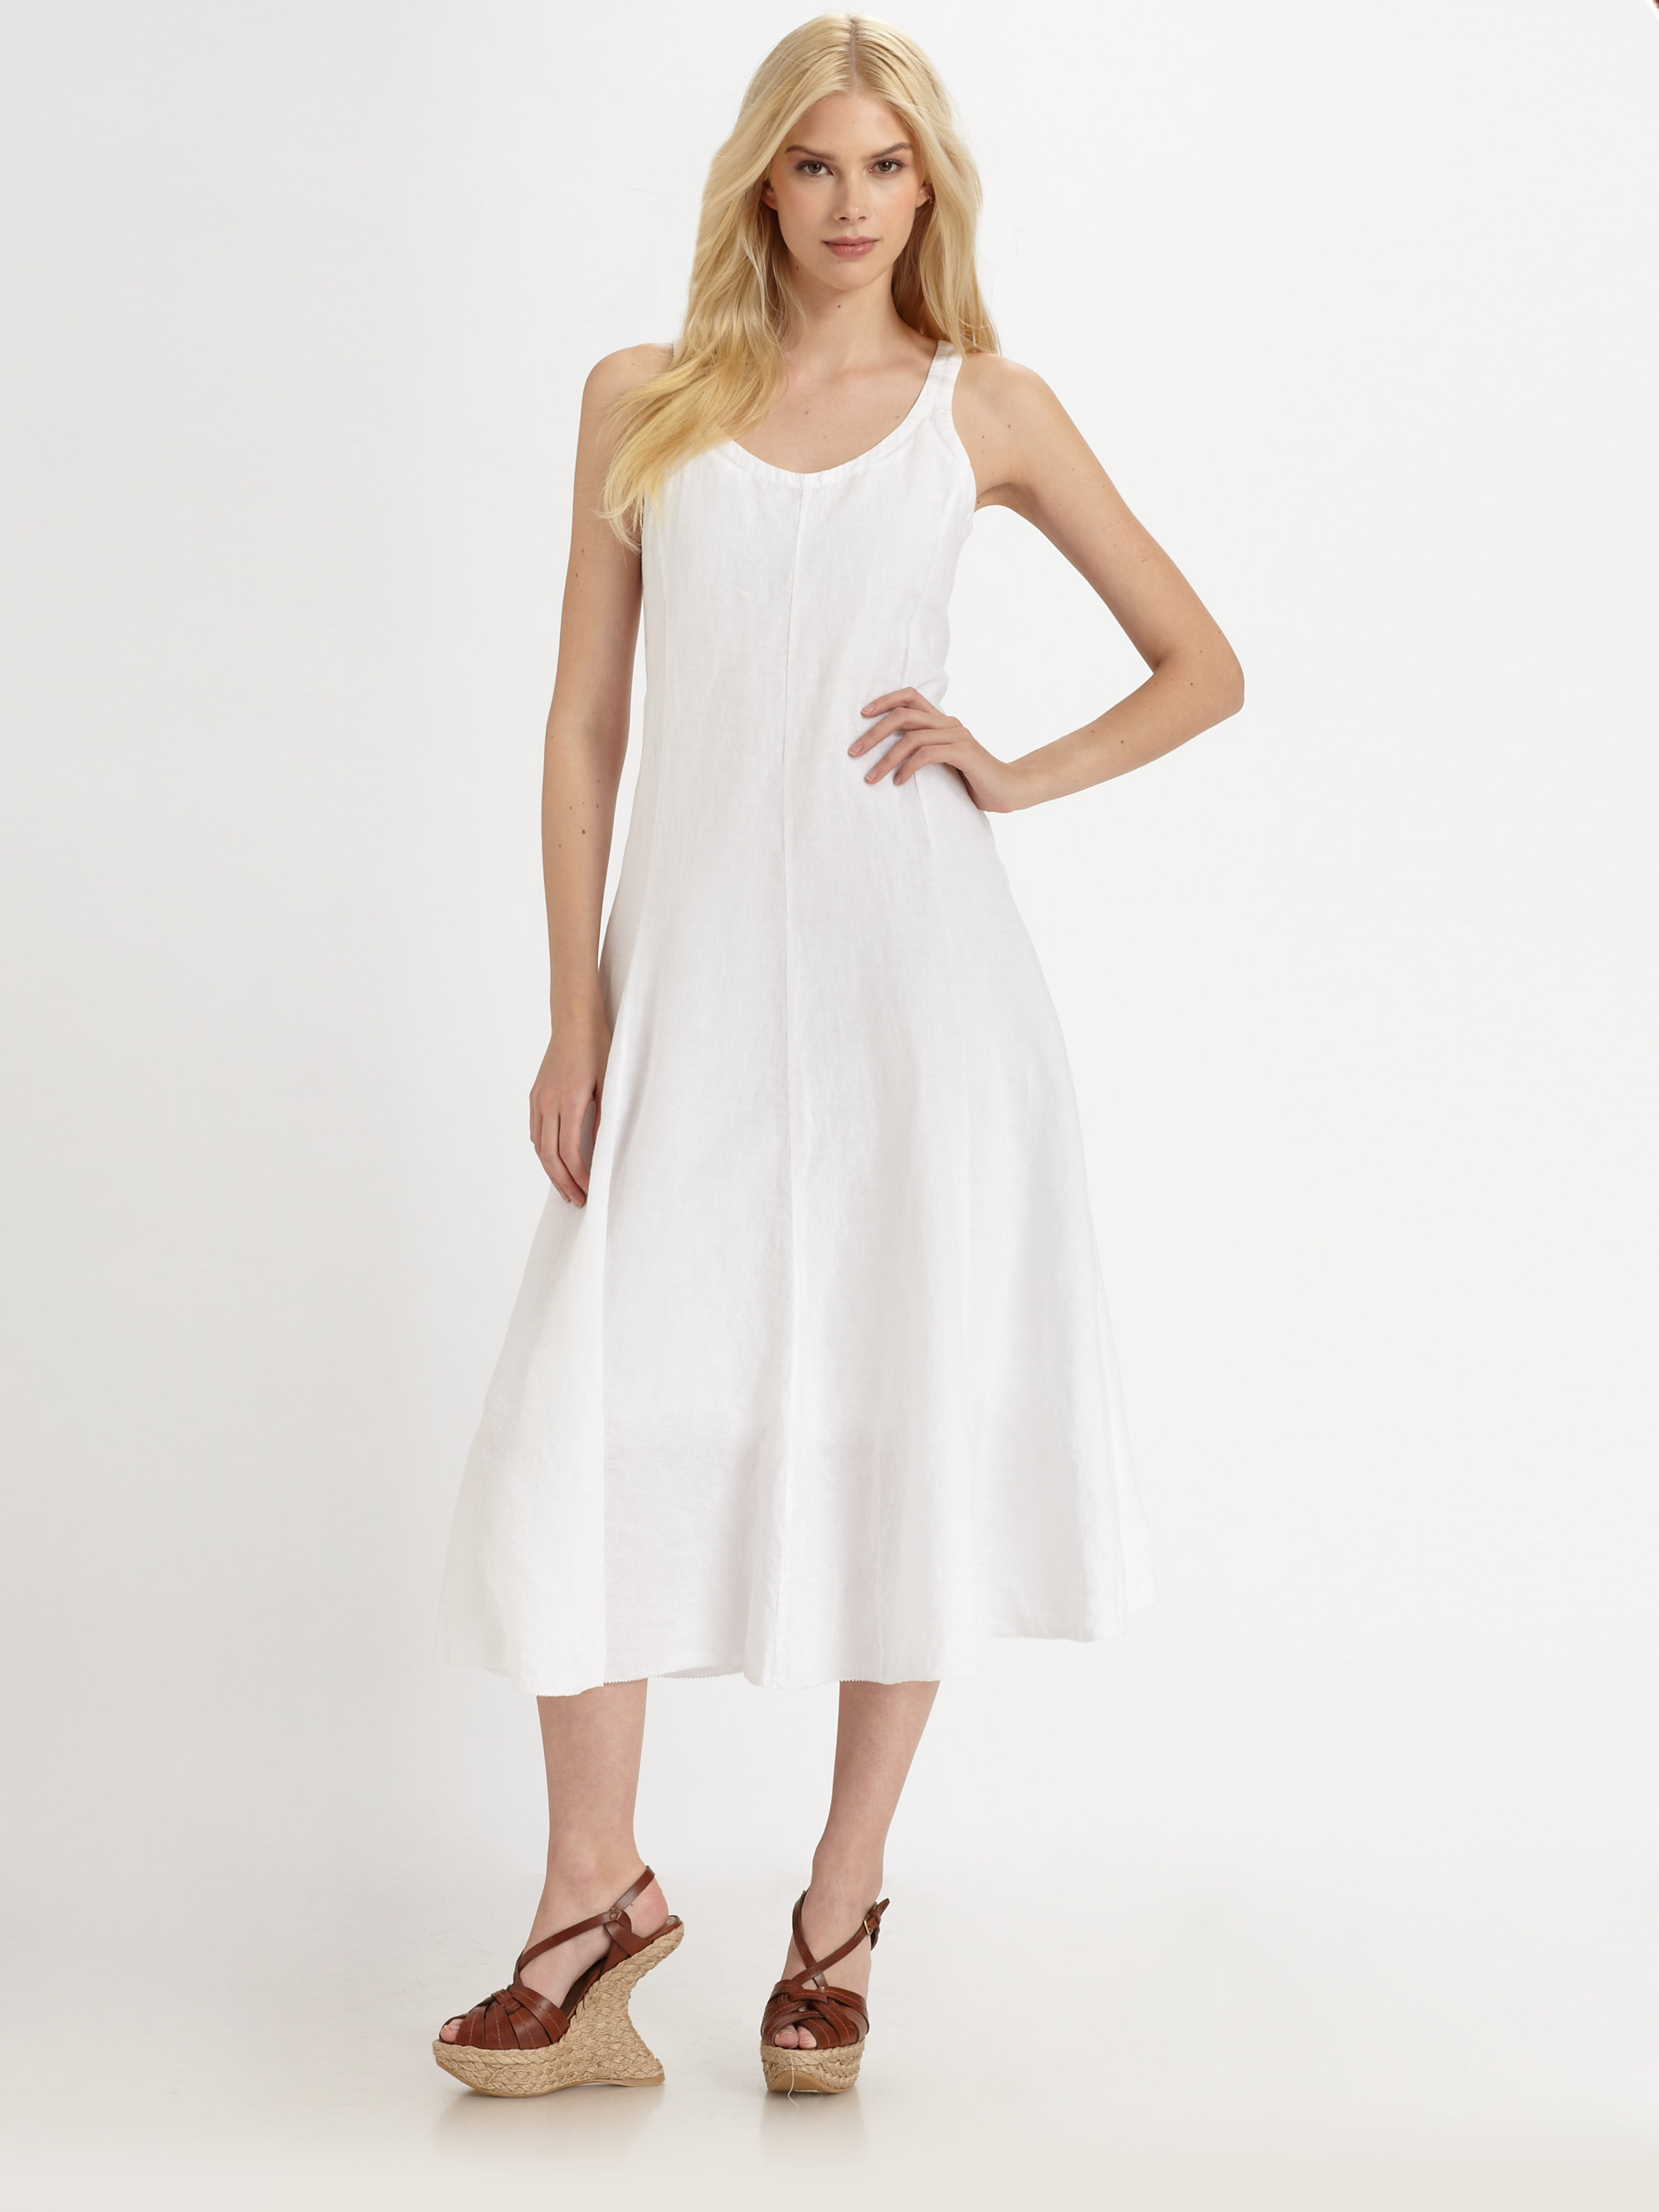 Lyst - Eileen Fisher Handkerchief Linen Dress in White